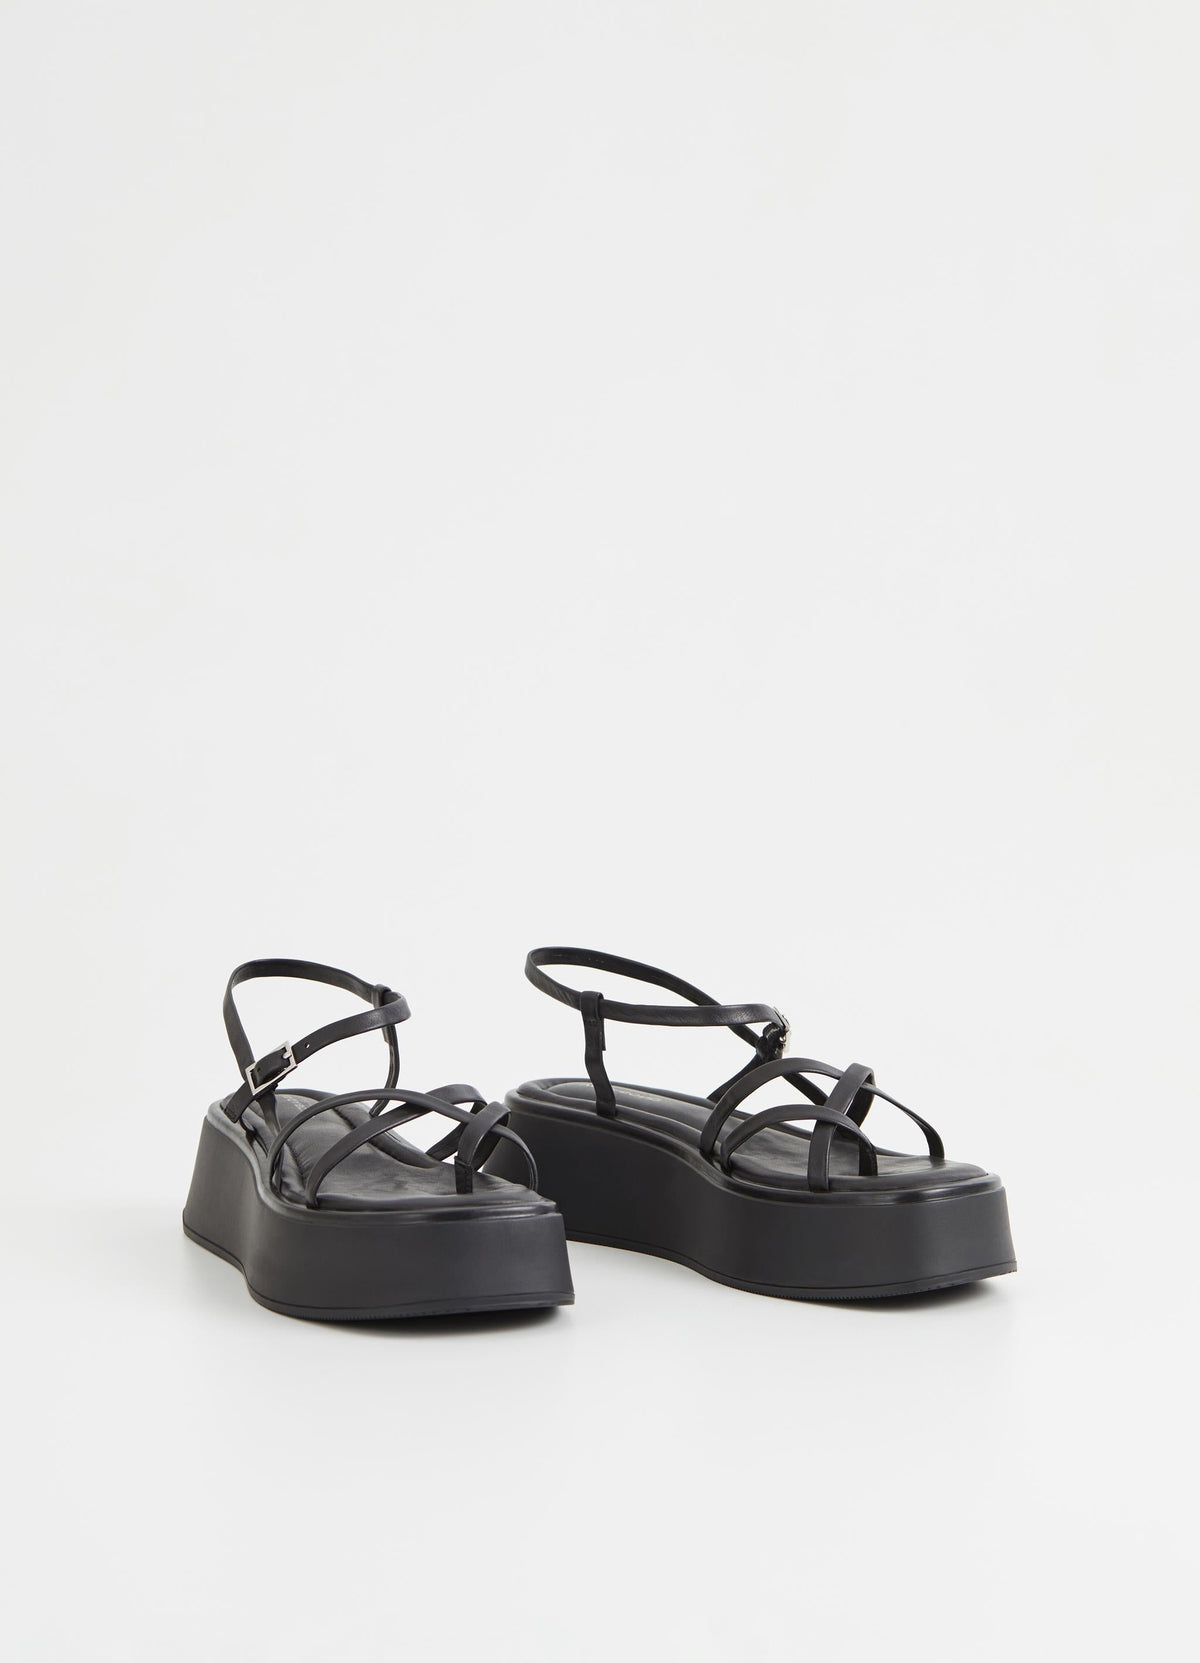 Platform black strappy sandal